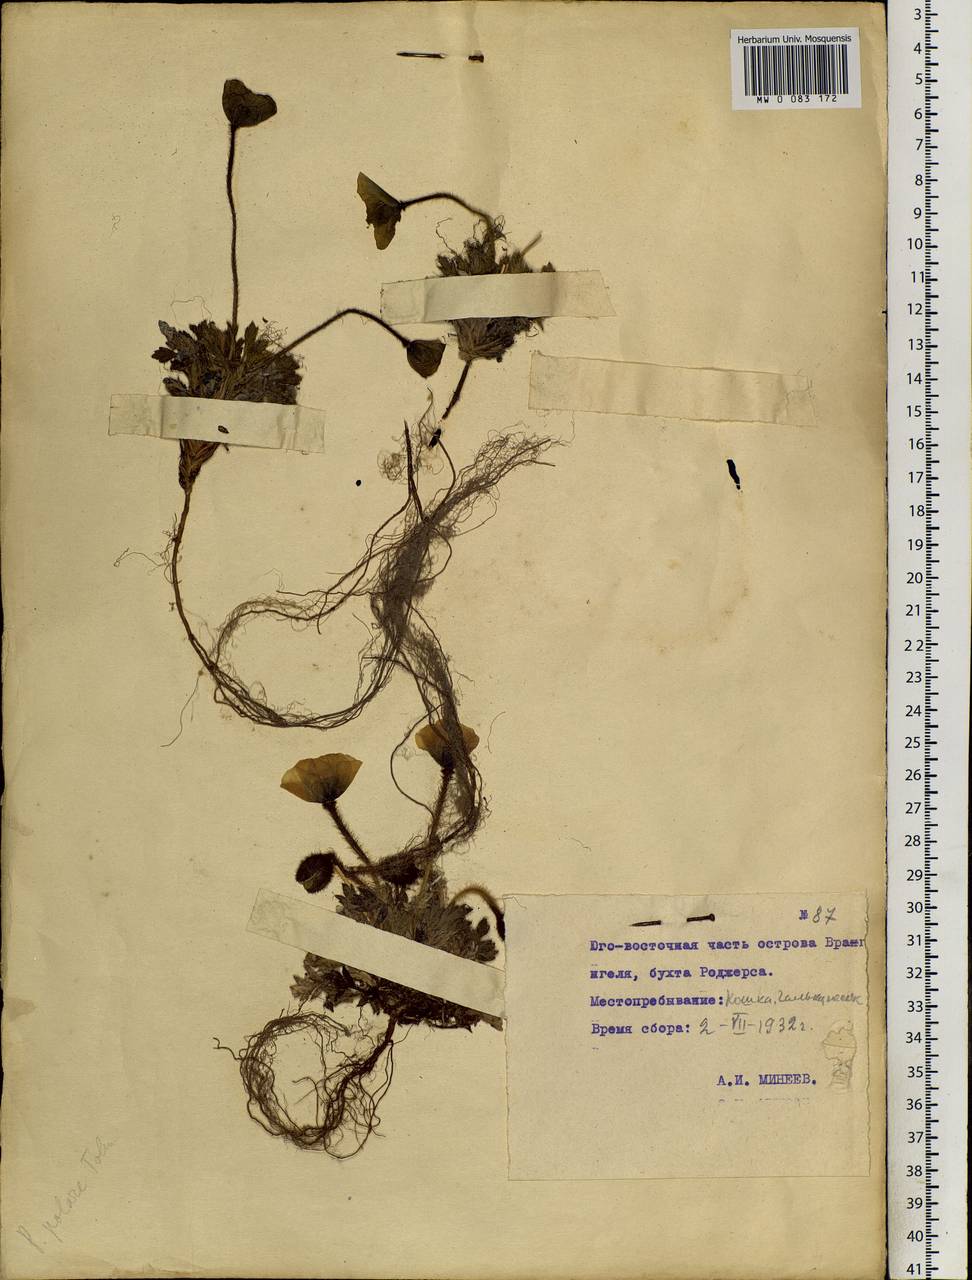 Oreomecon radicatum subsp. radicatum, Siberia, Chukotka & Kamchatka (S7) (Russia)